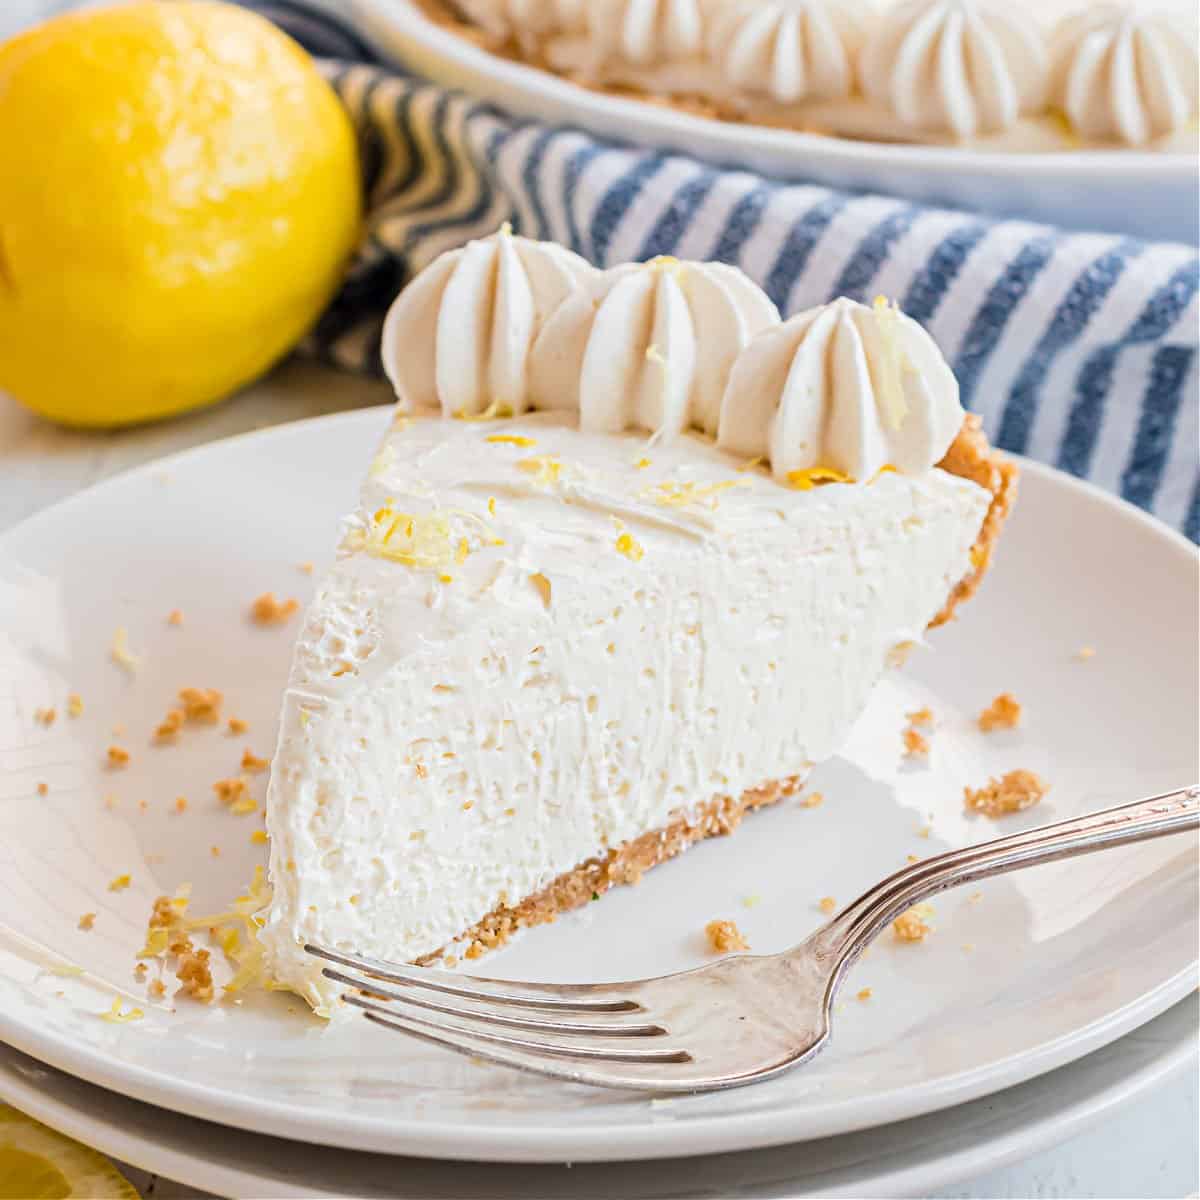 Slice of no bake cheesecake with lemon.